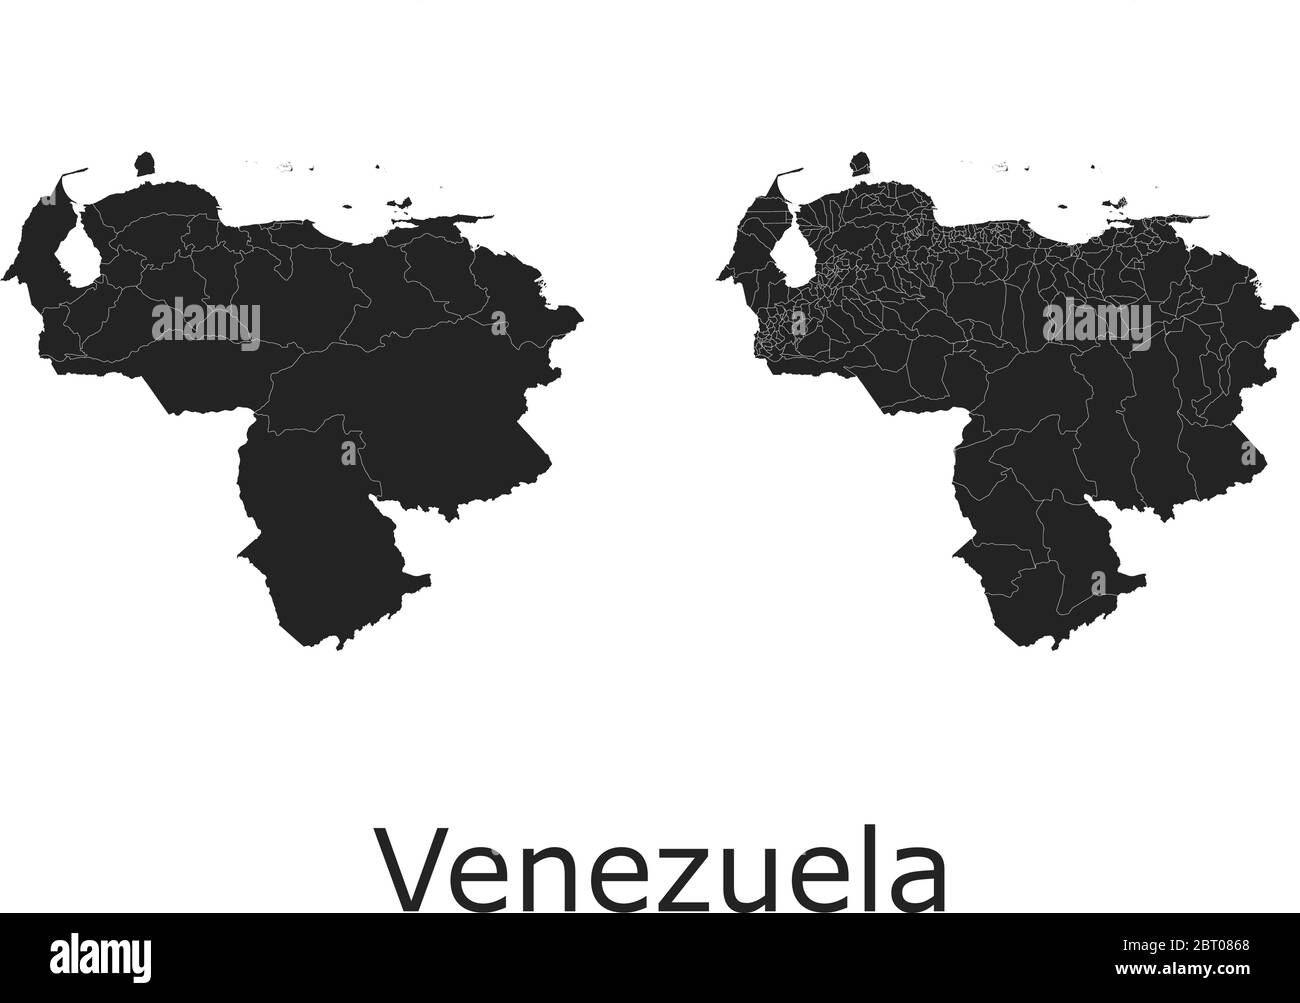 Venezuela vector maps with administrative regions, municipalities, departments, borders Stock Vector